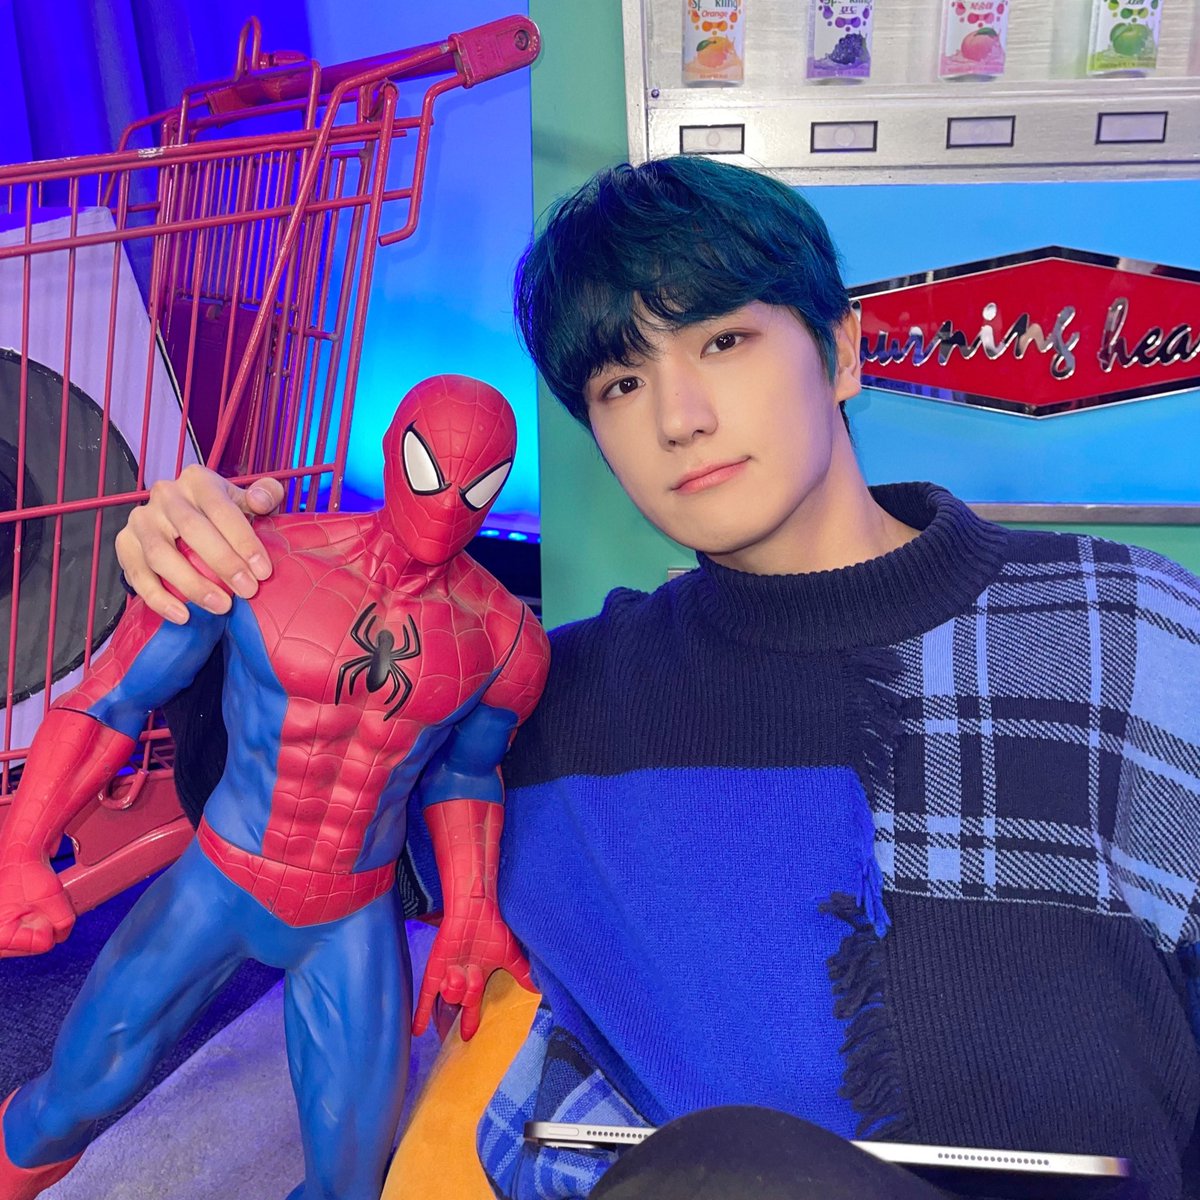 RT @chaniesarang: Hyunjae with Mark Lee the Spider-man https://t.co/EfXVdeYSbs